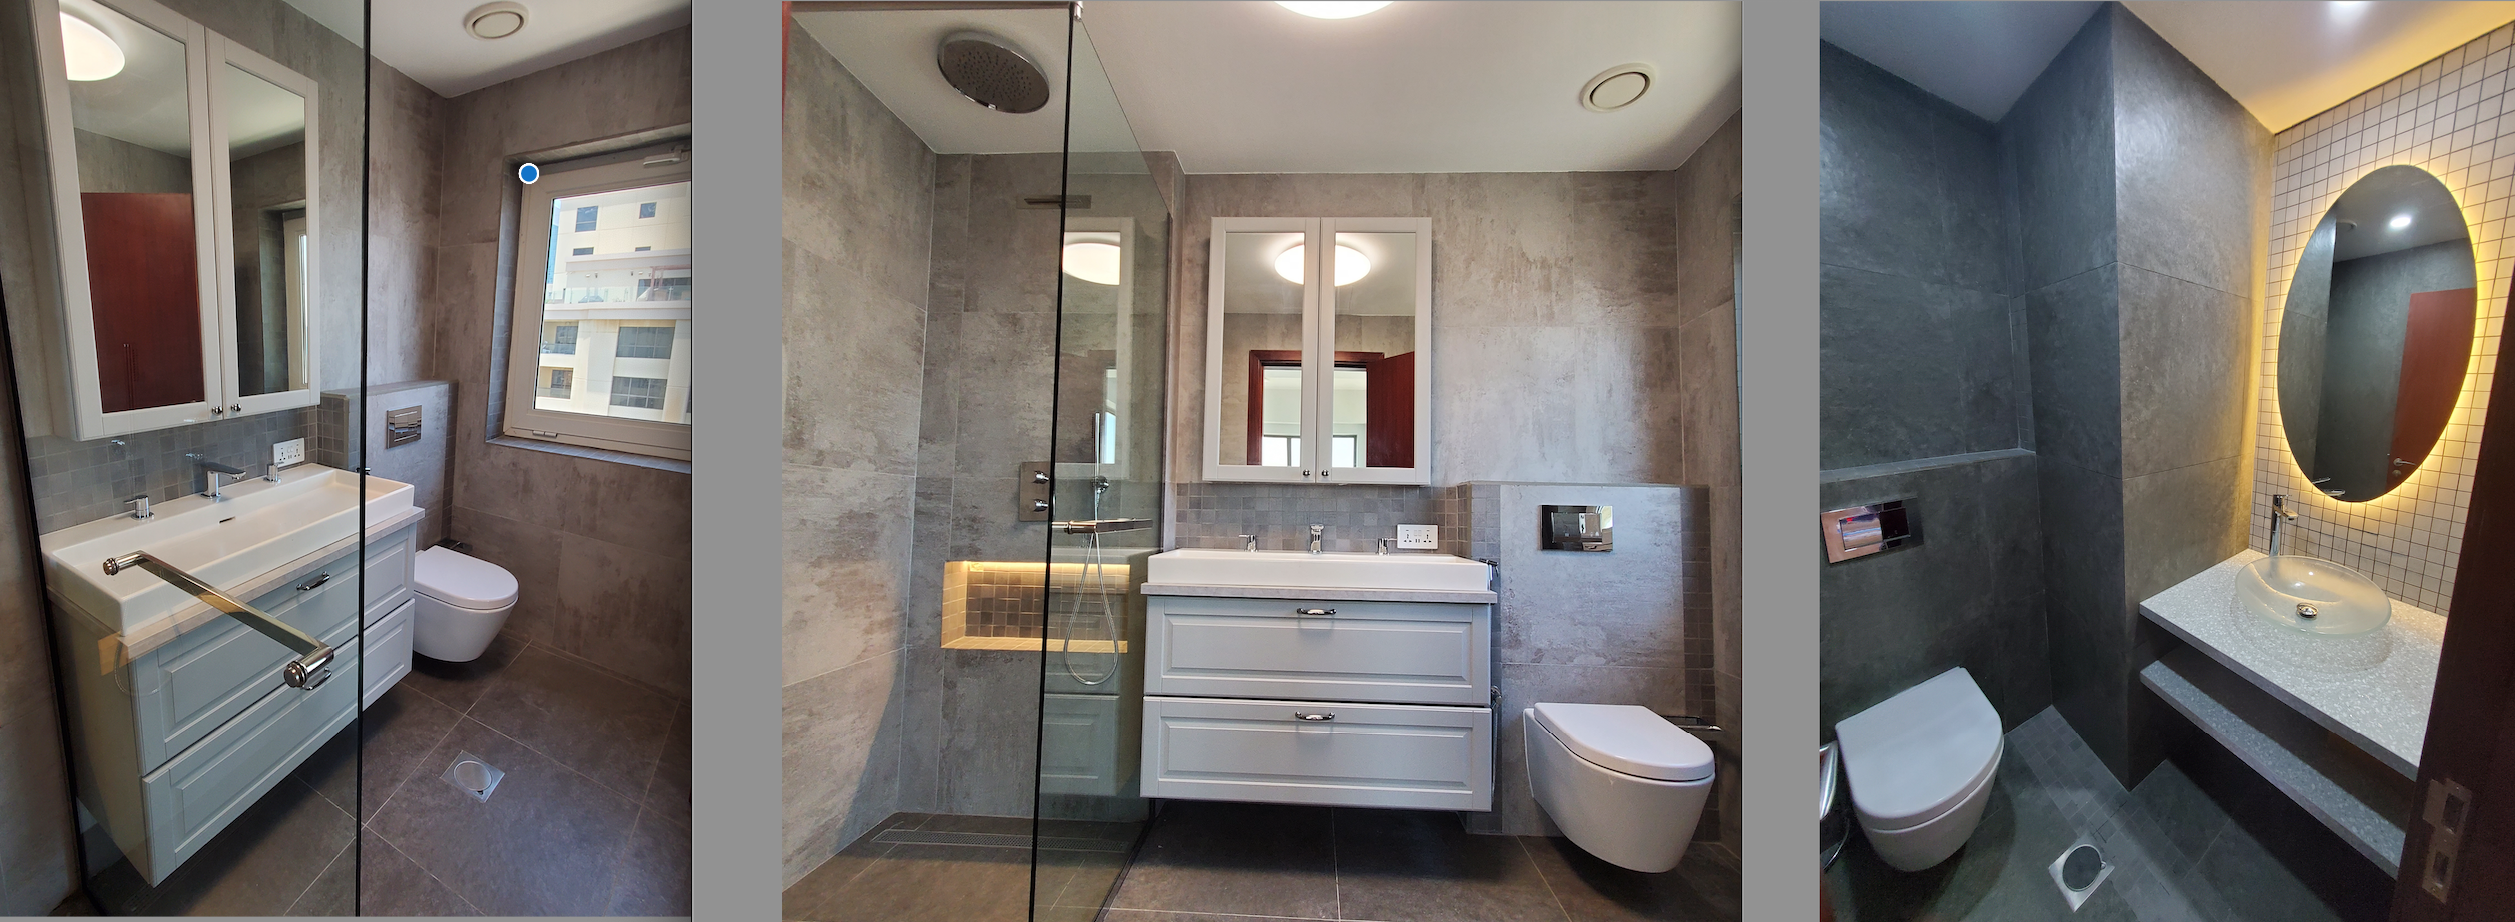 bathroom kitchen home renovations in jbr, dubai marina, springs, remodeling homes, interior designer dubai